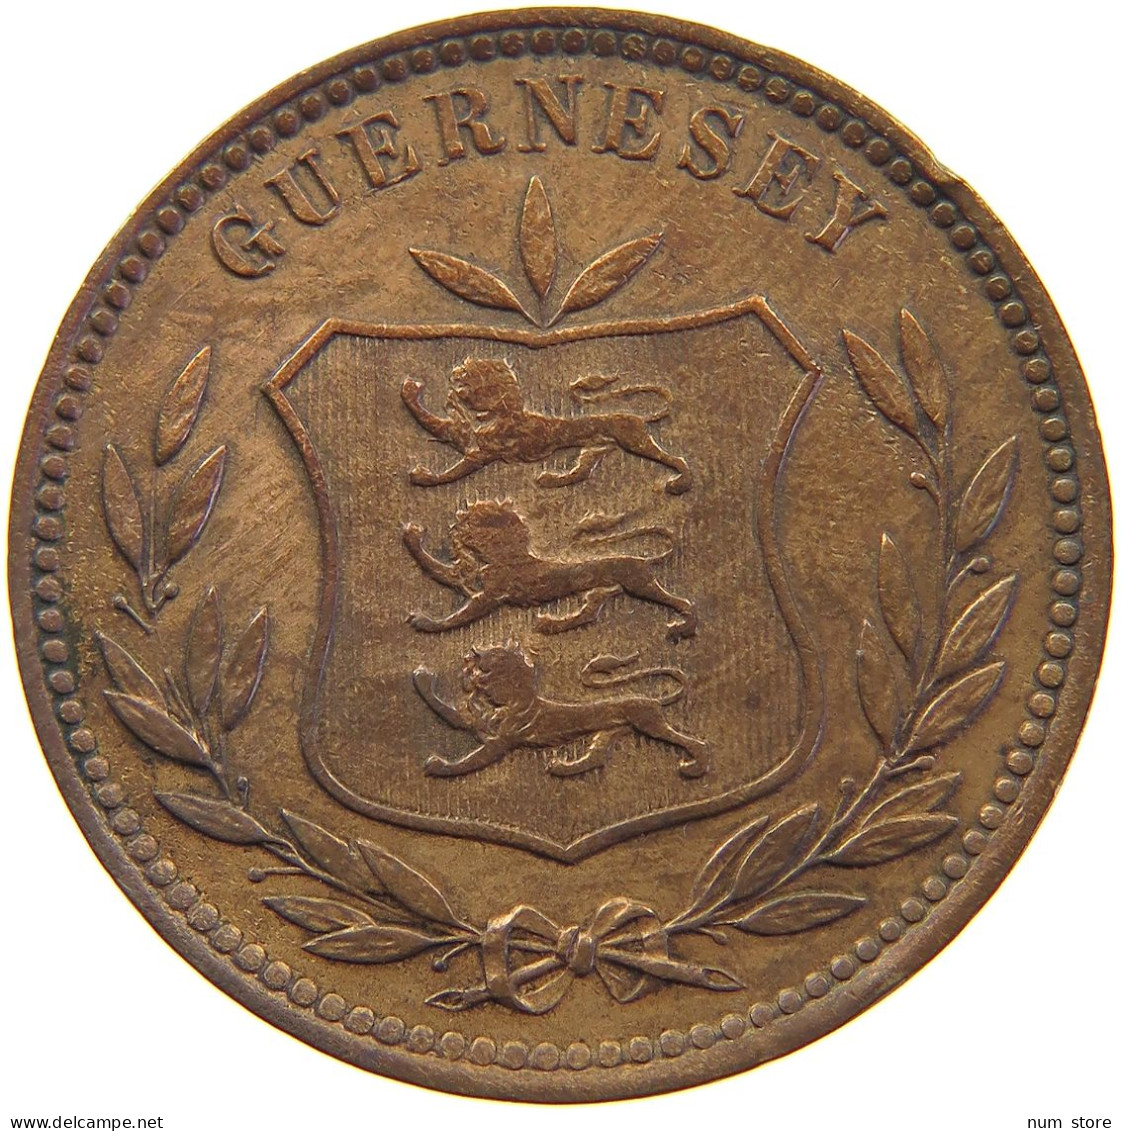 GUERNSEY 8 DOUBLES 1902 Edward VII., 1901 - 1910 #c060 0071 - Guernsey